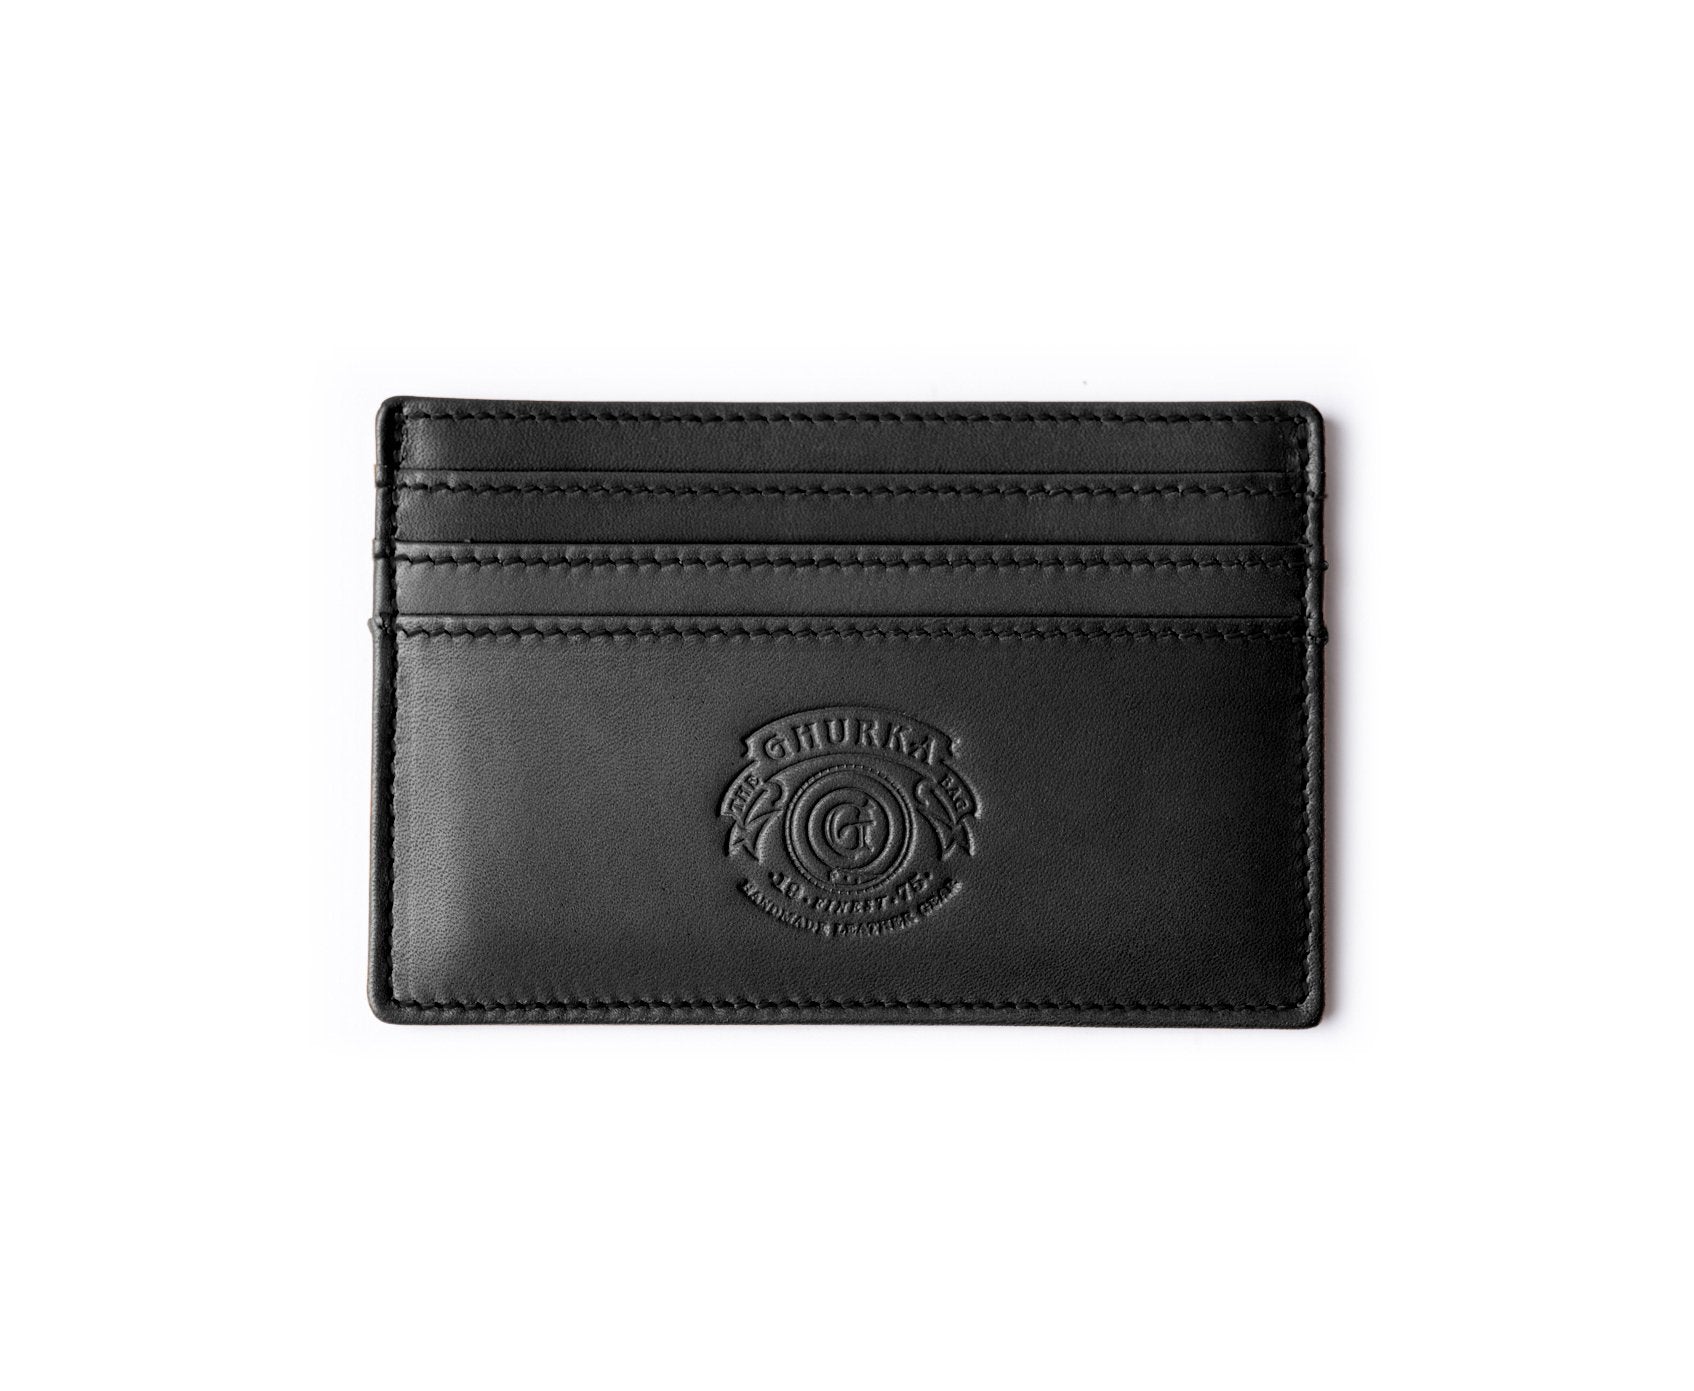 Black Leather Card Case Wallet